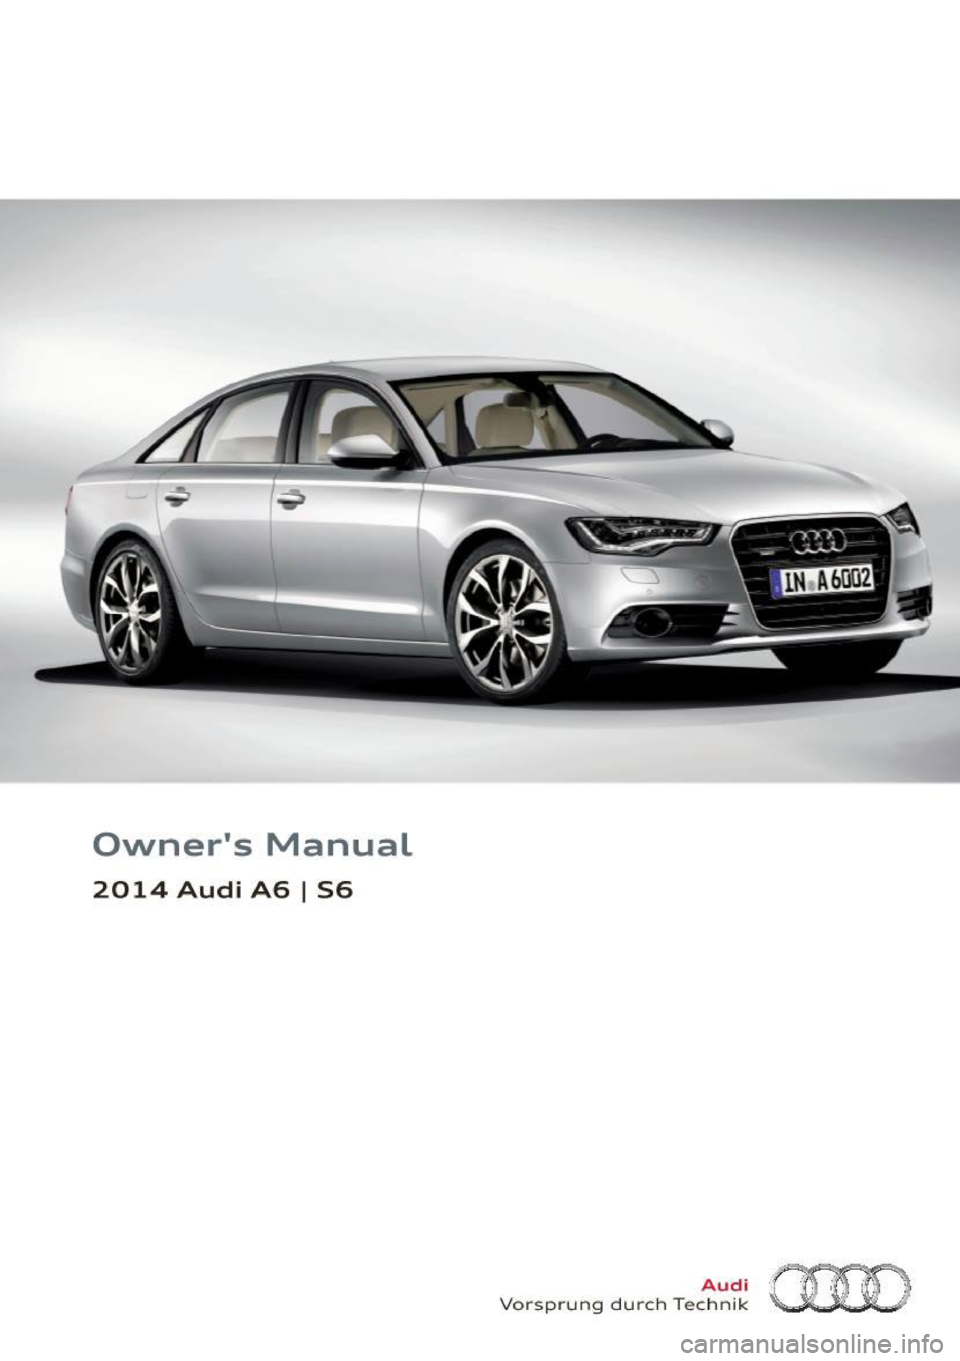 AUDI S6 2014  Owners Manual Owners  Manual 
2014  Audi  A6 I S6 
Vorsp rung  du rch  Tec~~f~ (HD  